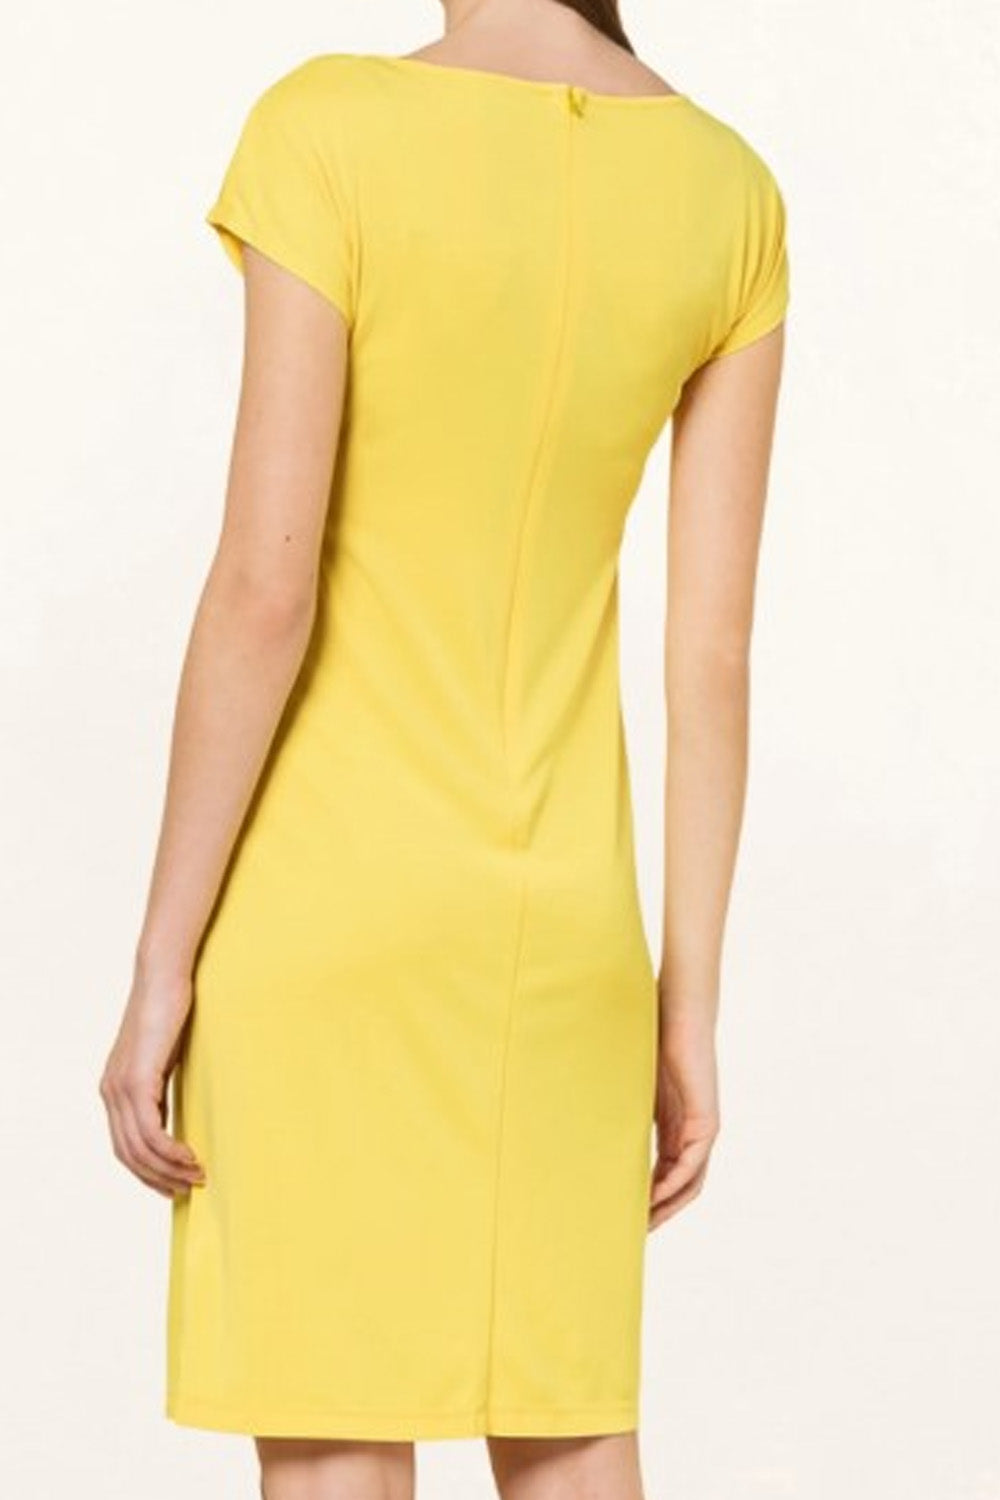 Primal Yellow Dress